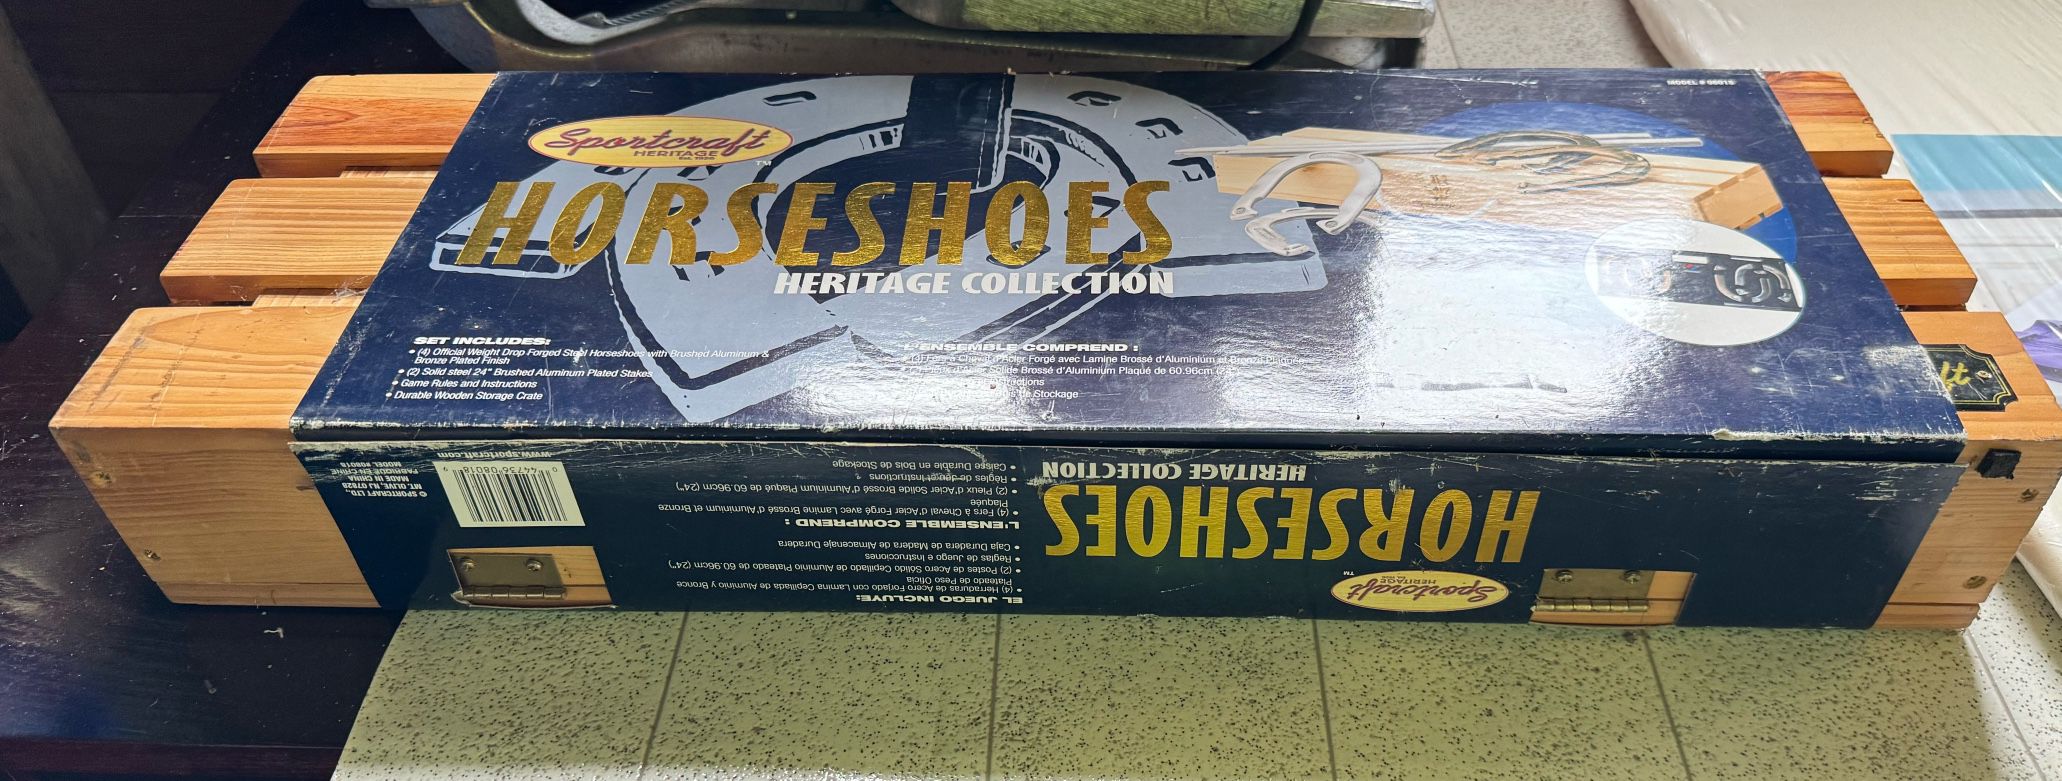 Horseshoe Game Set - Brand New